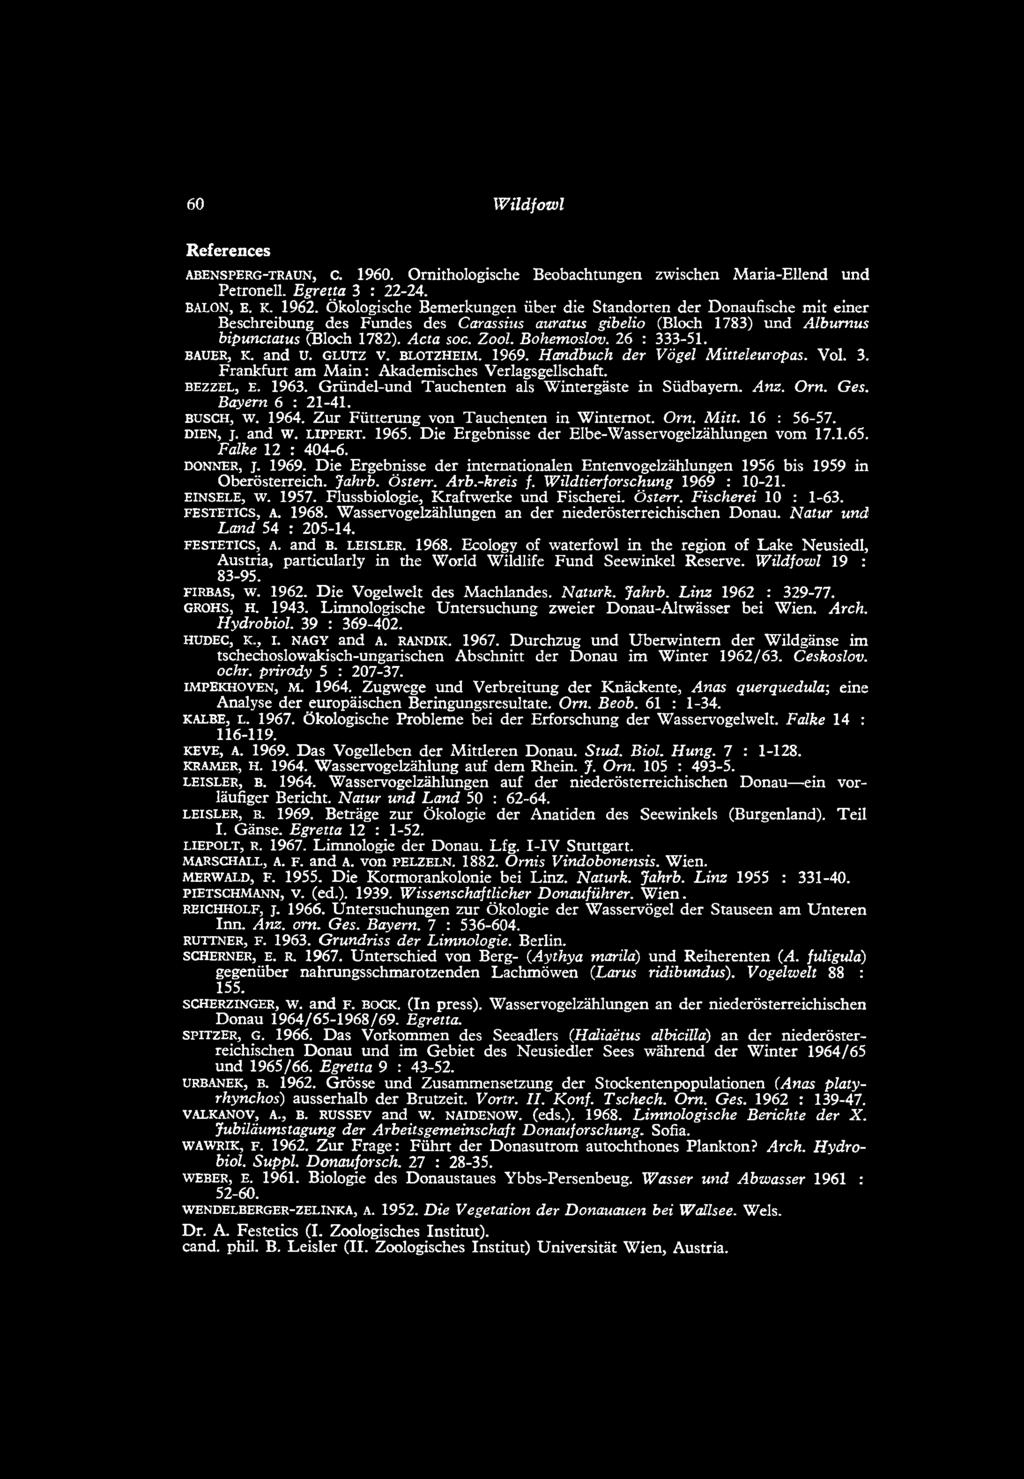 Bohemoslov. 2 6 : 33 3-51. BAUER, K. a n d U. GLUTZ v. B lo tz h e im. 1969. Handbuch der Vögel Mitteleuropas. Vol. 3. Frankfurt am Main: Akademisches Verlagsgellschaft. BEZZEL, E. 1963.